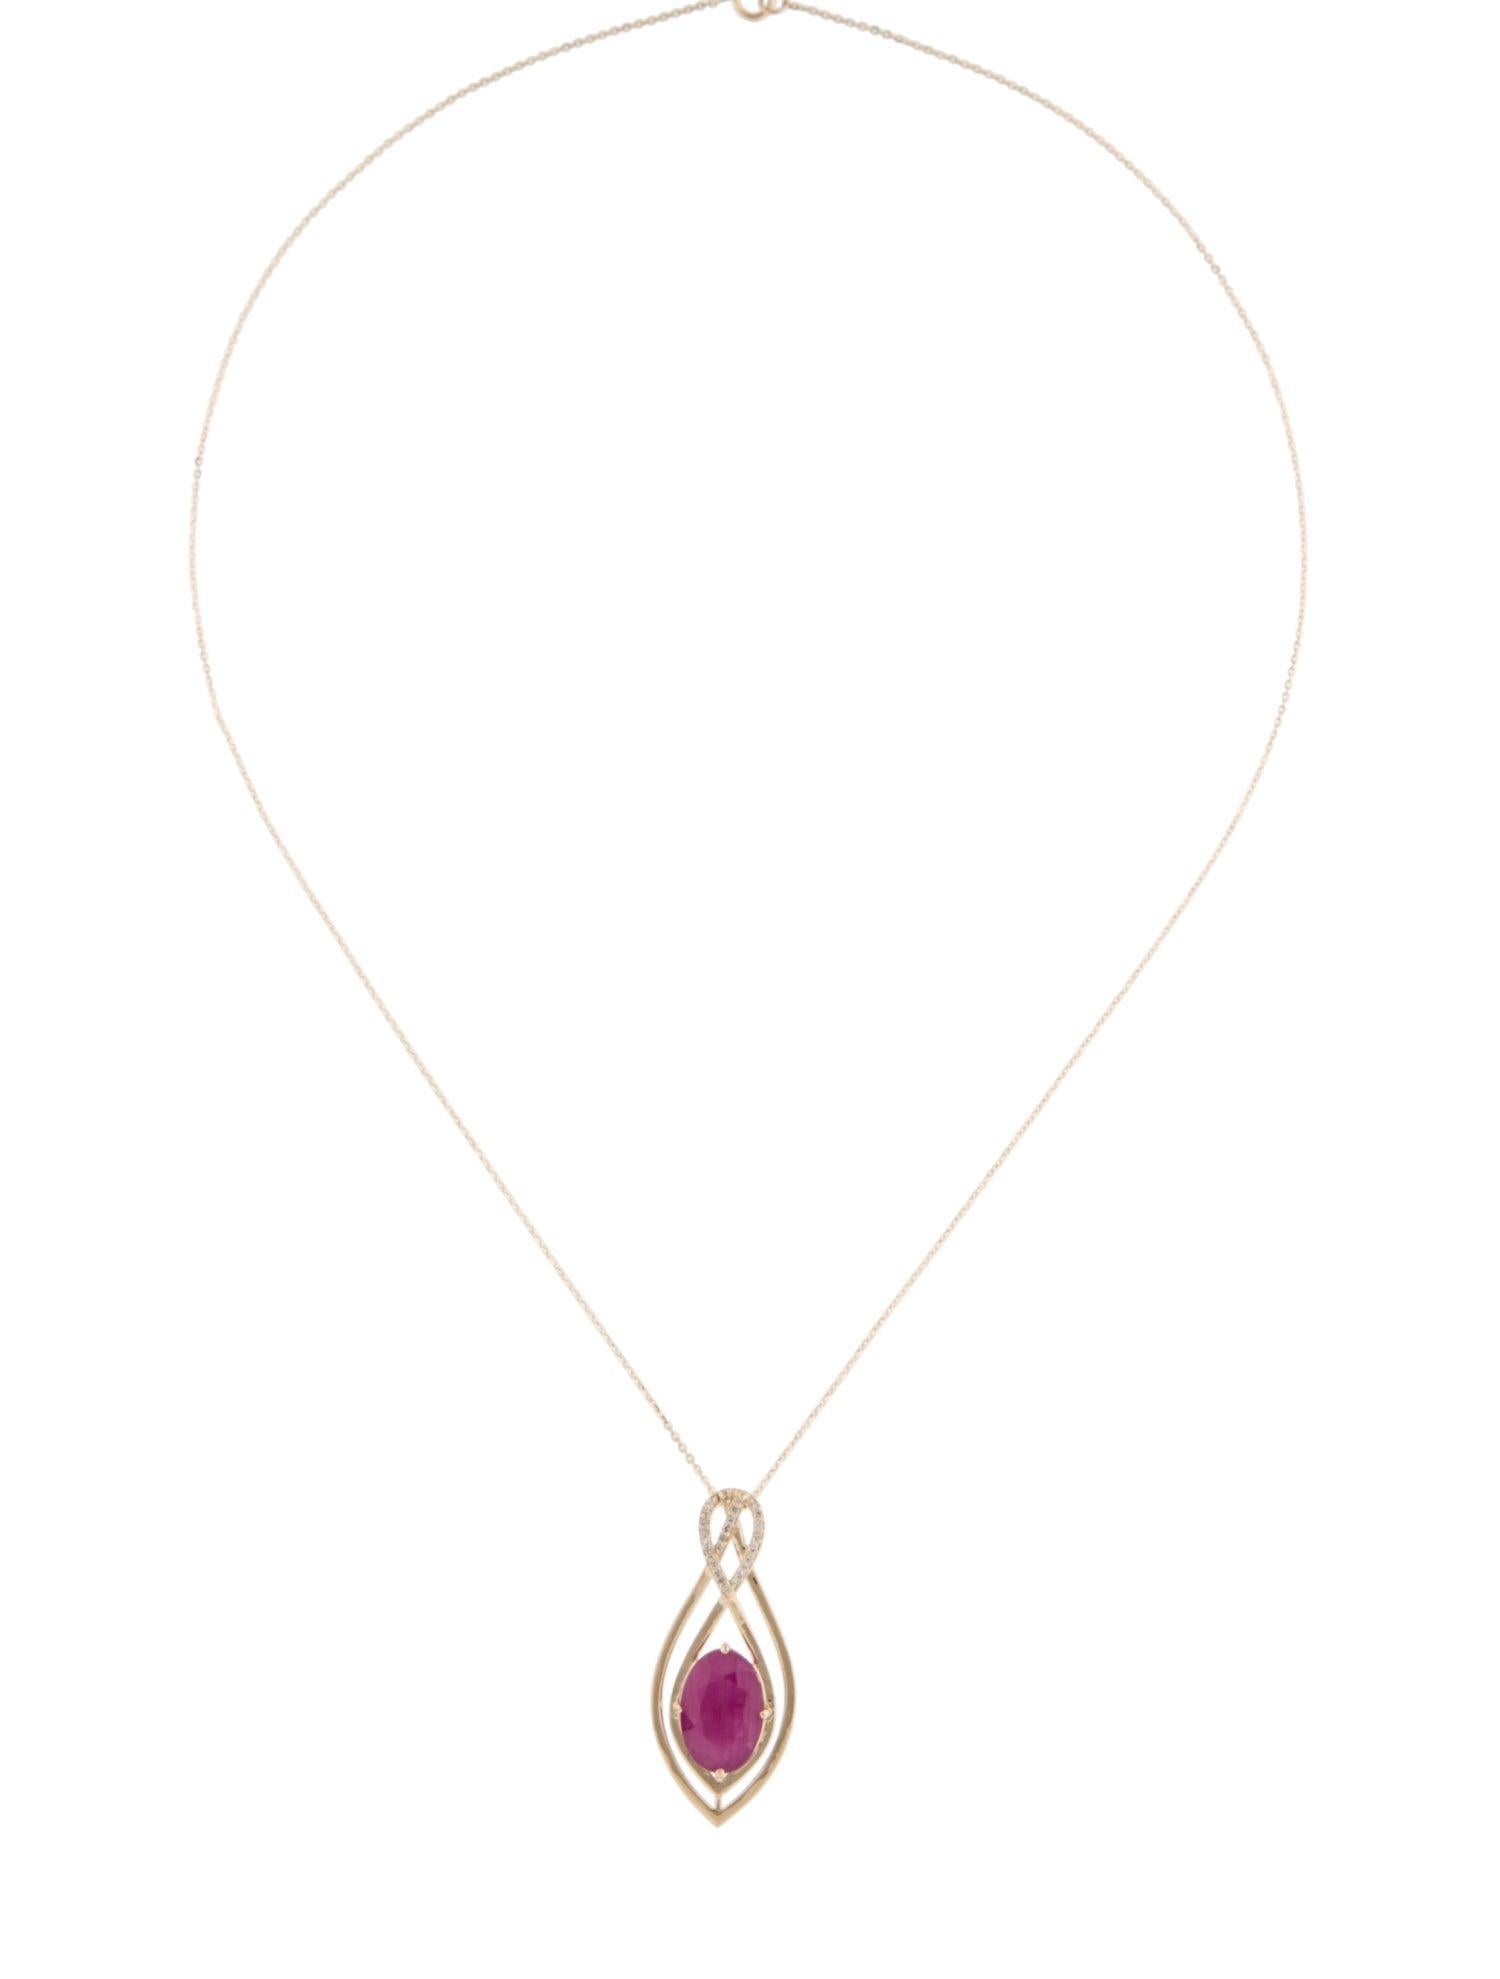 Oval Cut Exquisite 14K Ruby & Diamond Pendant Necklace  4.07ct Gemstone Sparkle For Sale